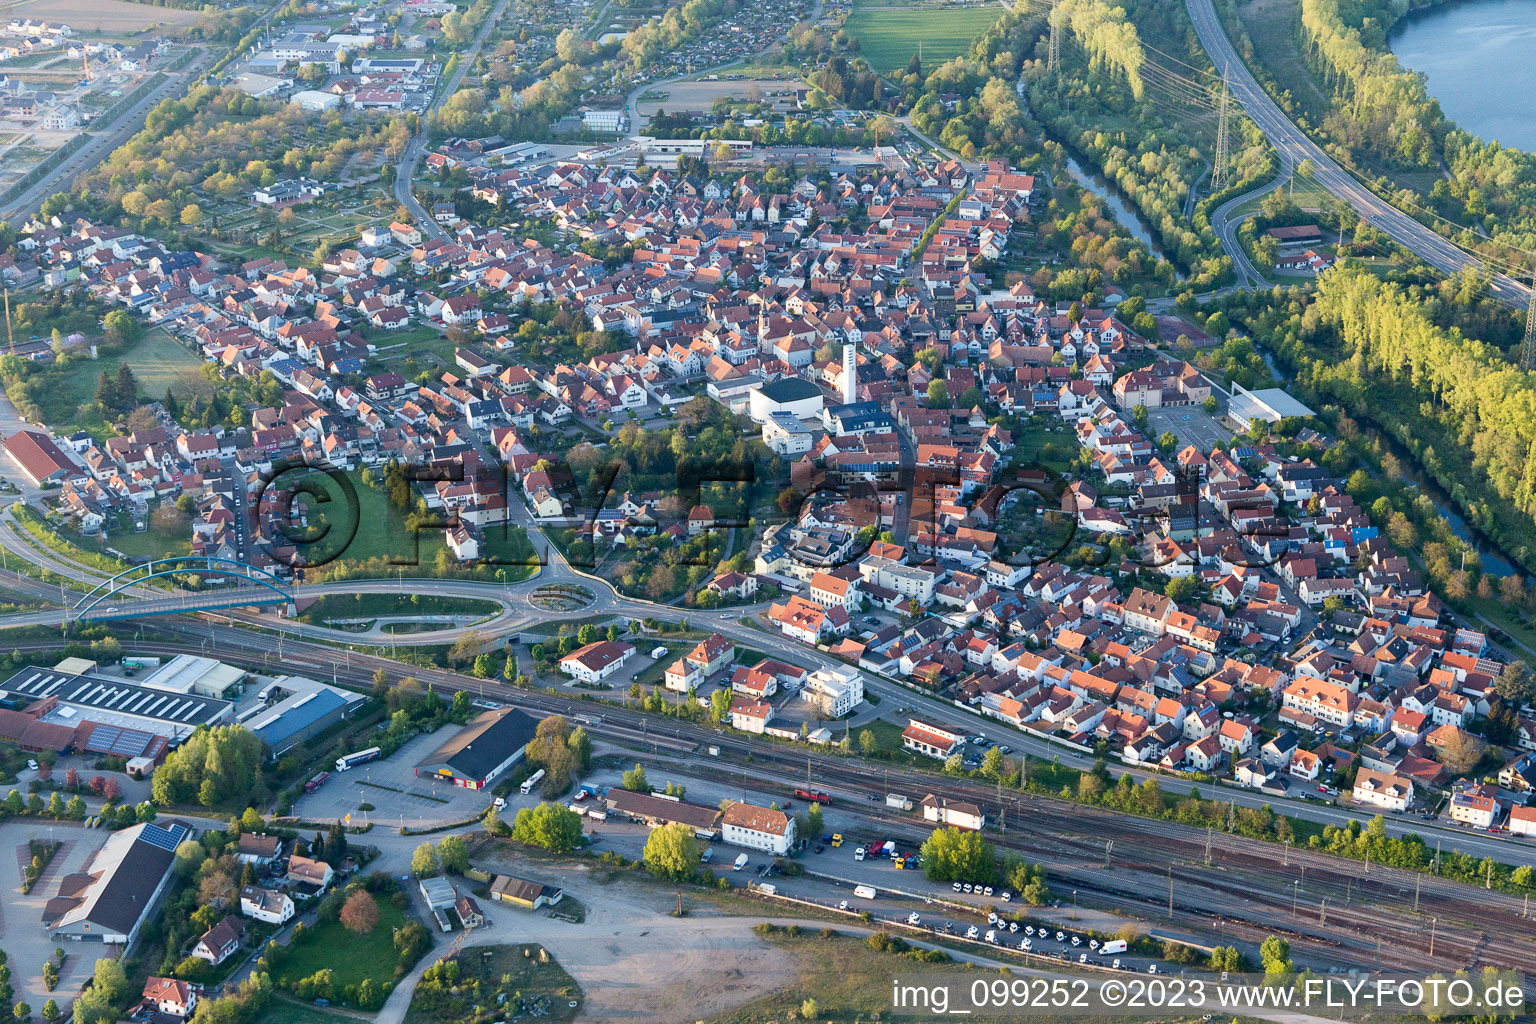 Drone recording of Wörth am Rhein in the state Rhineland-Palatinate, Germany